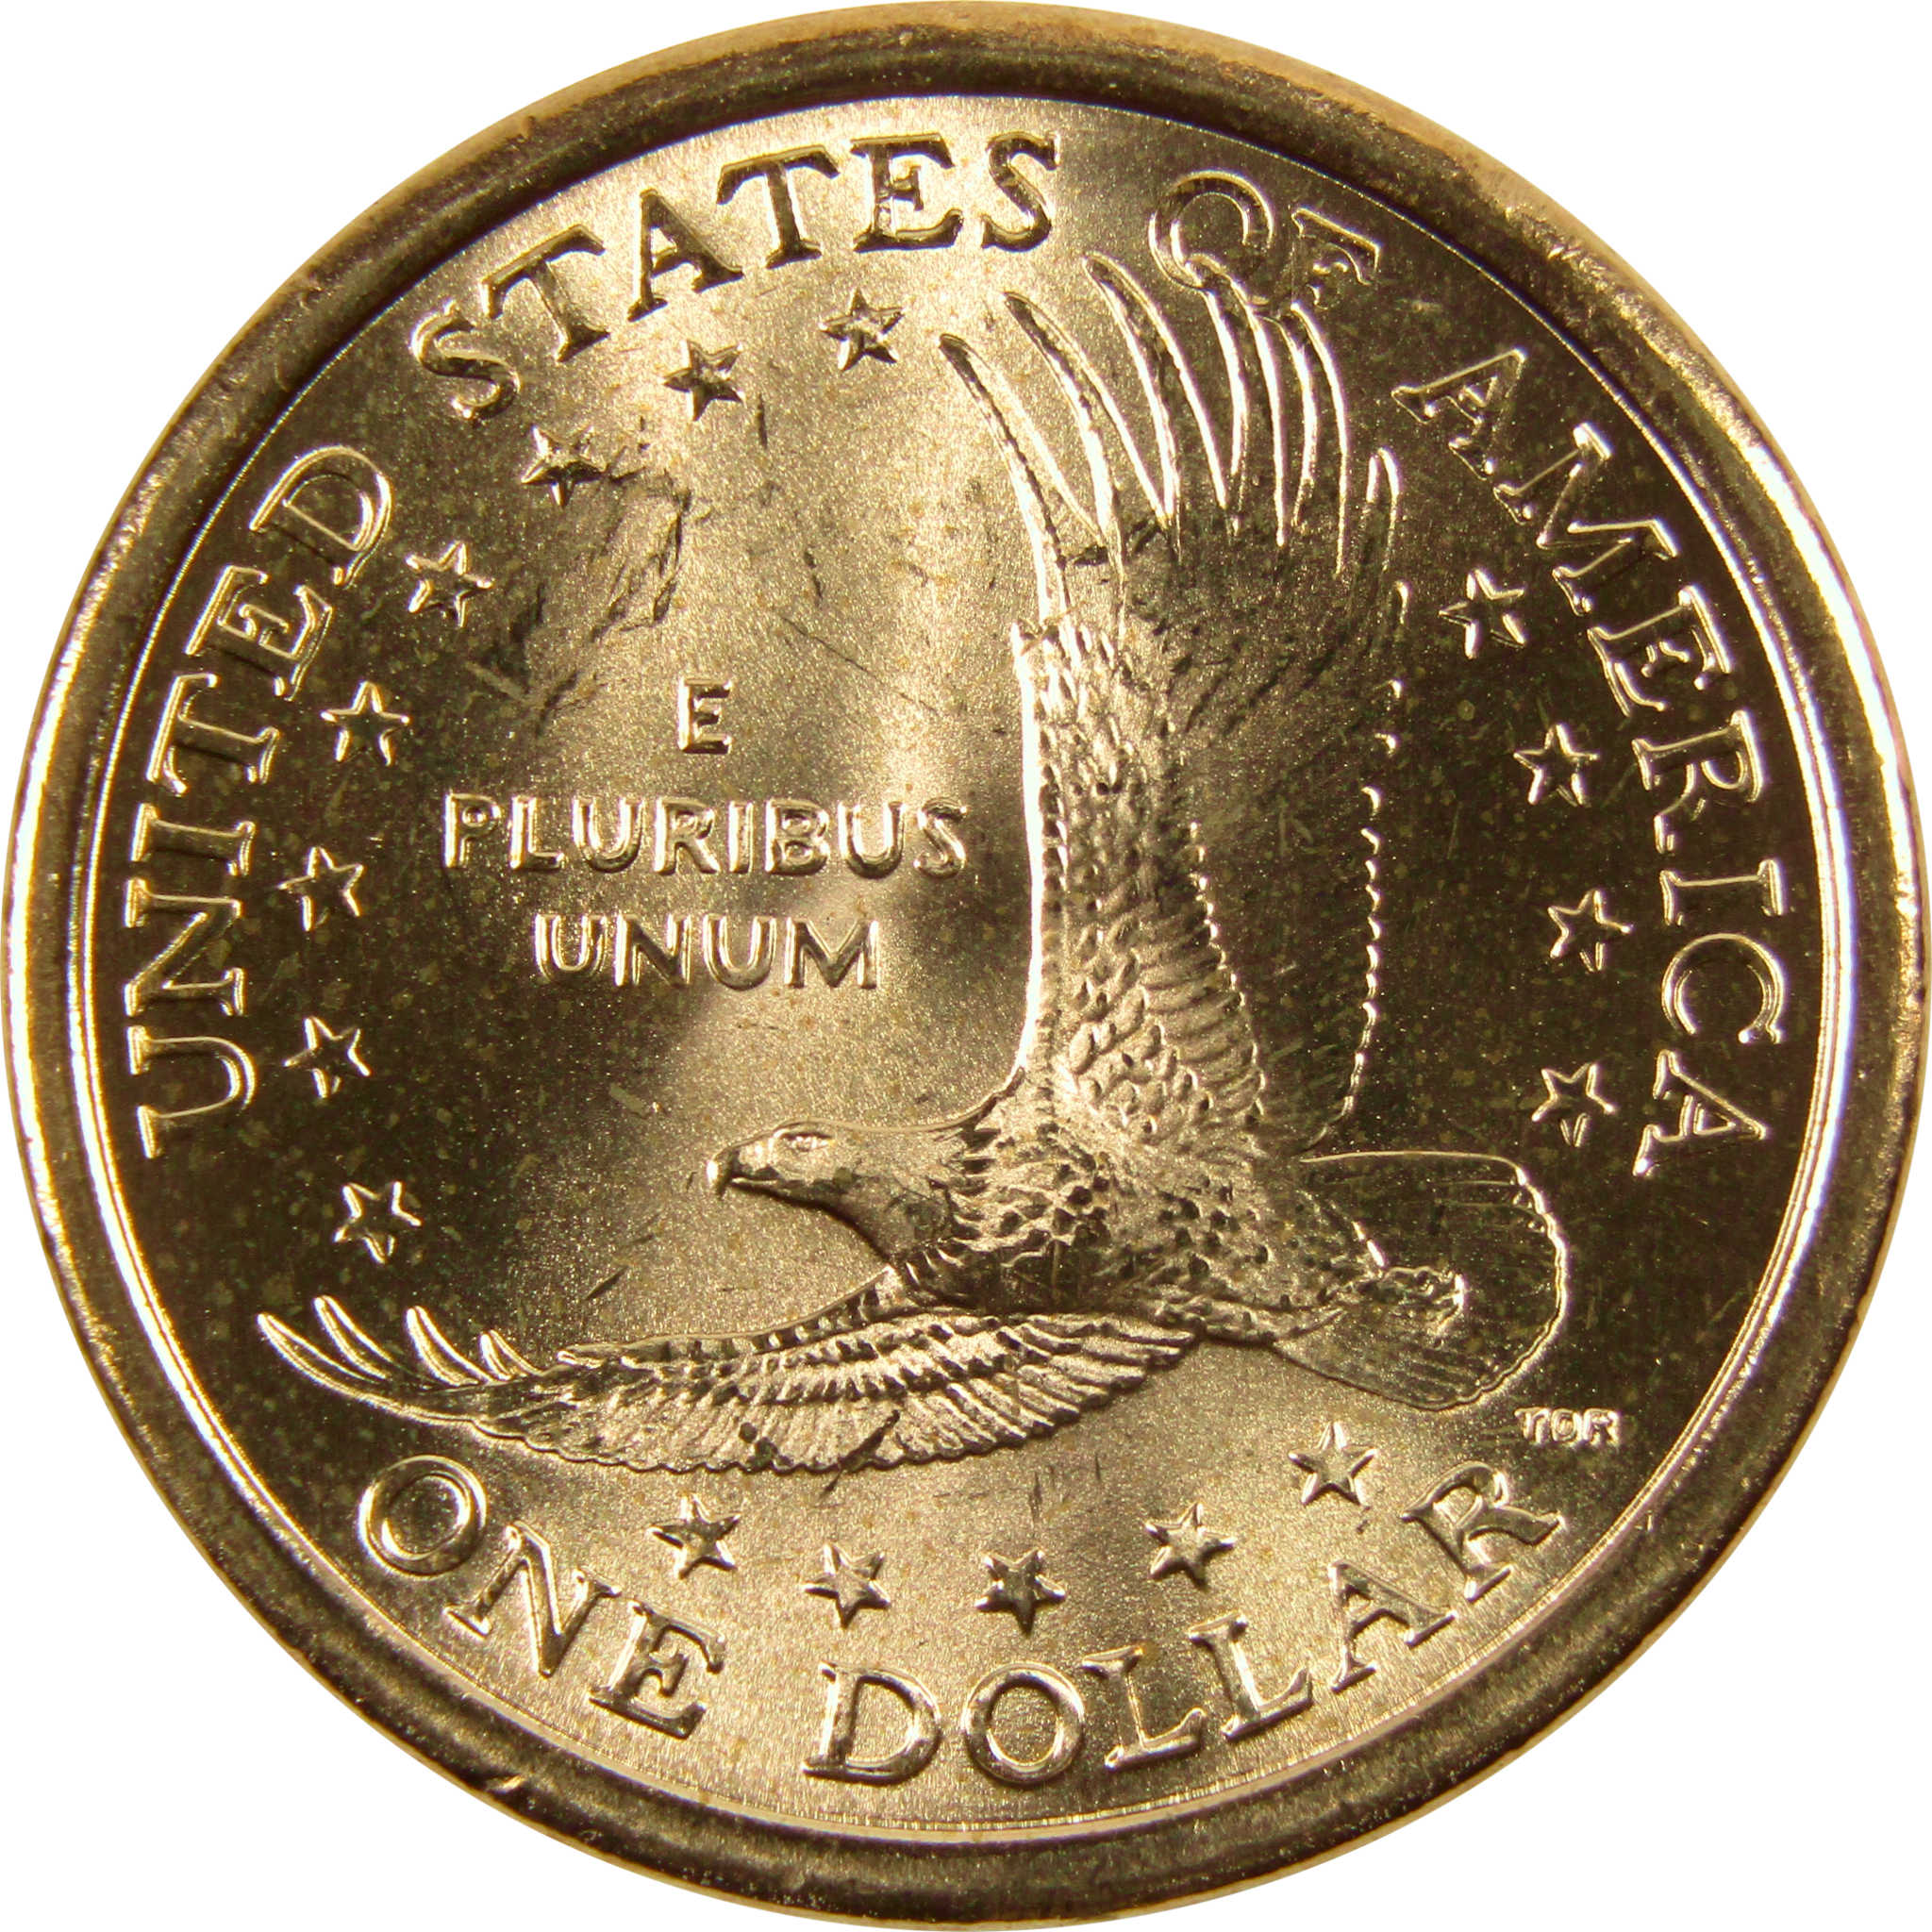 2003 D Sacagawea Native American Dollar BU Uncirculated $1 Coin